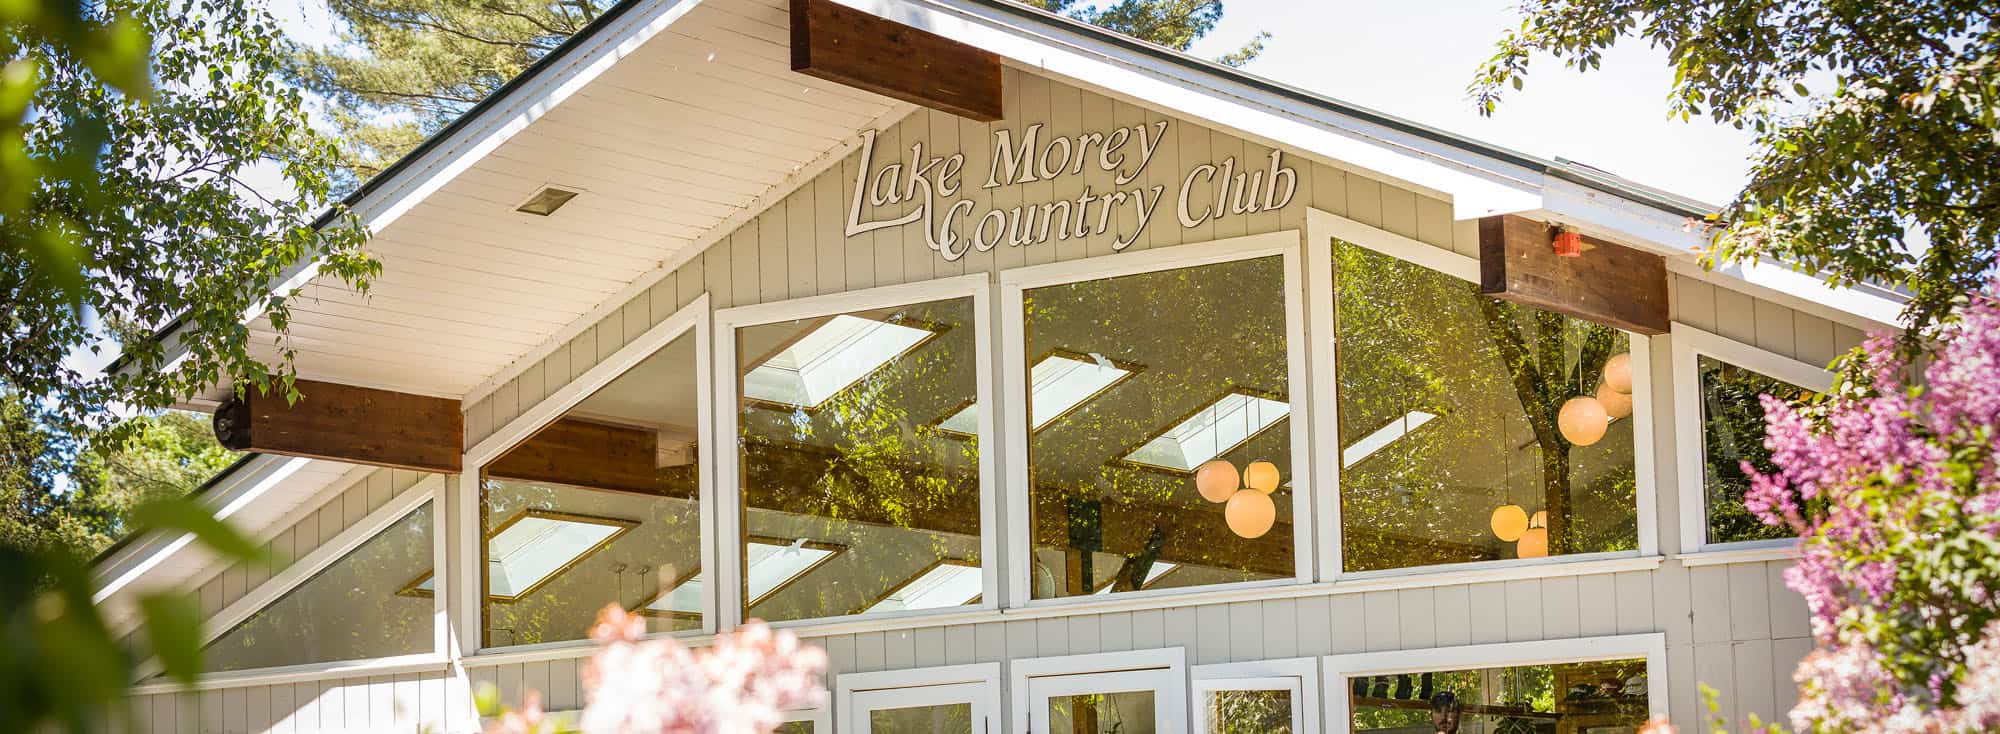 Lake Morey Resort - Summer Country Club Building